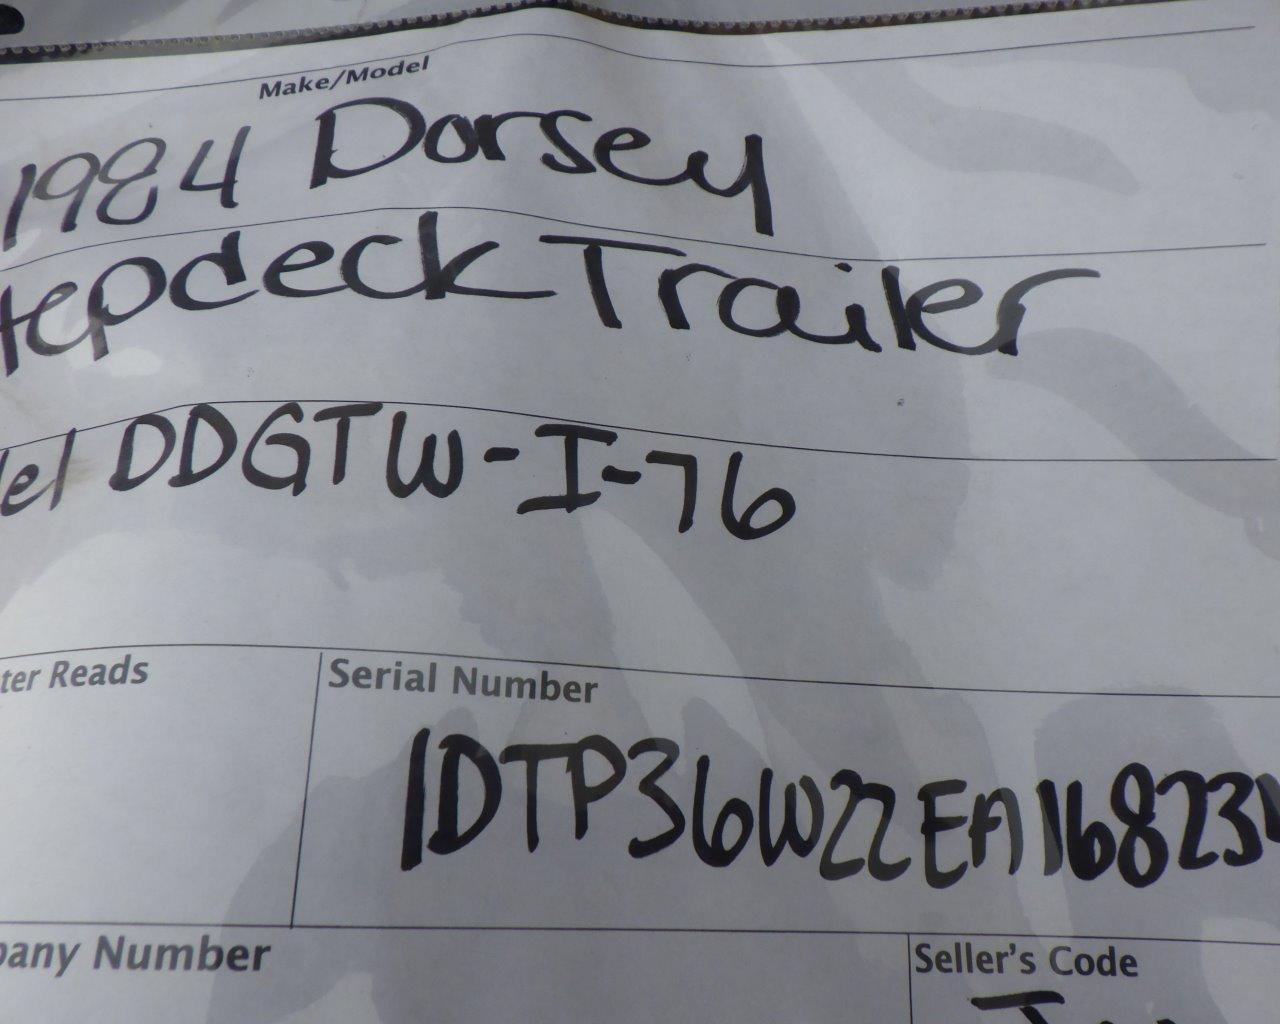 1984 DORSEY DDGTW-I-76 Step Deck Trailer s/n:1DTP36WZZEA168234